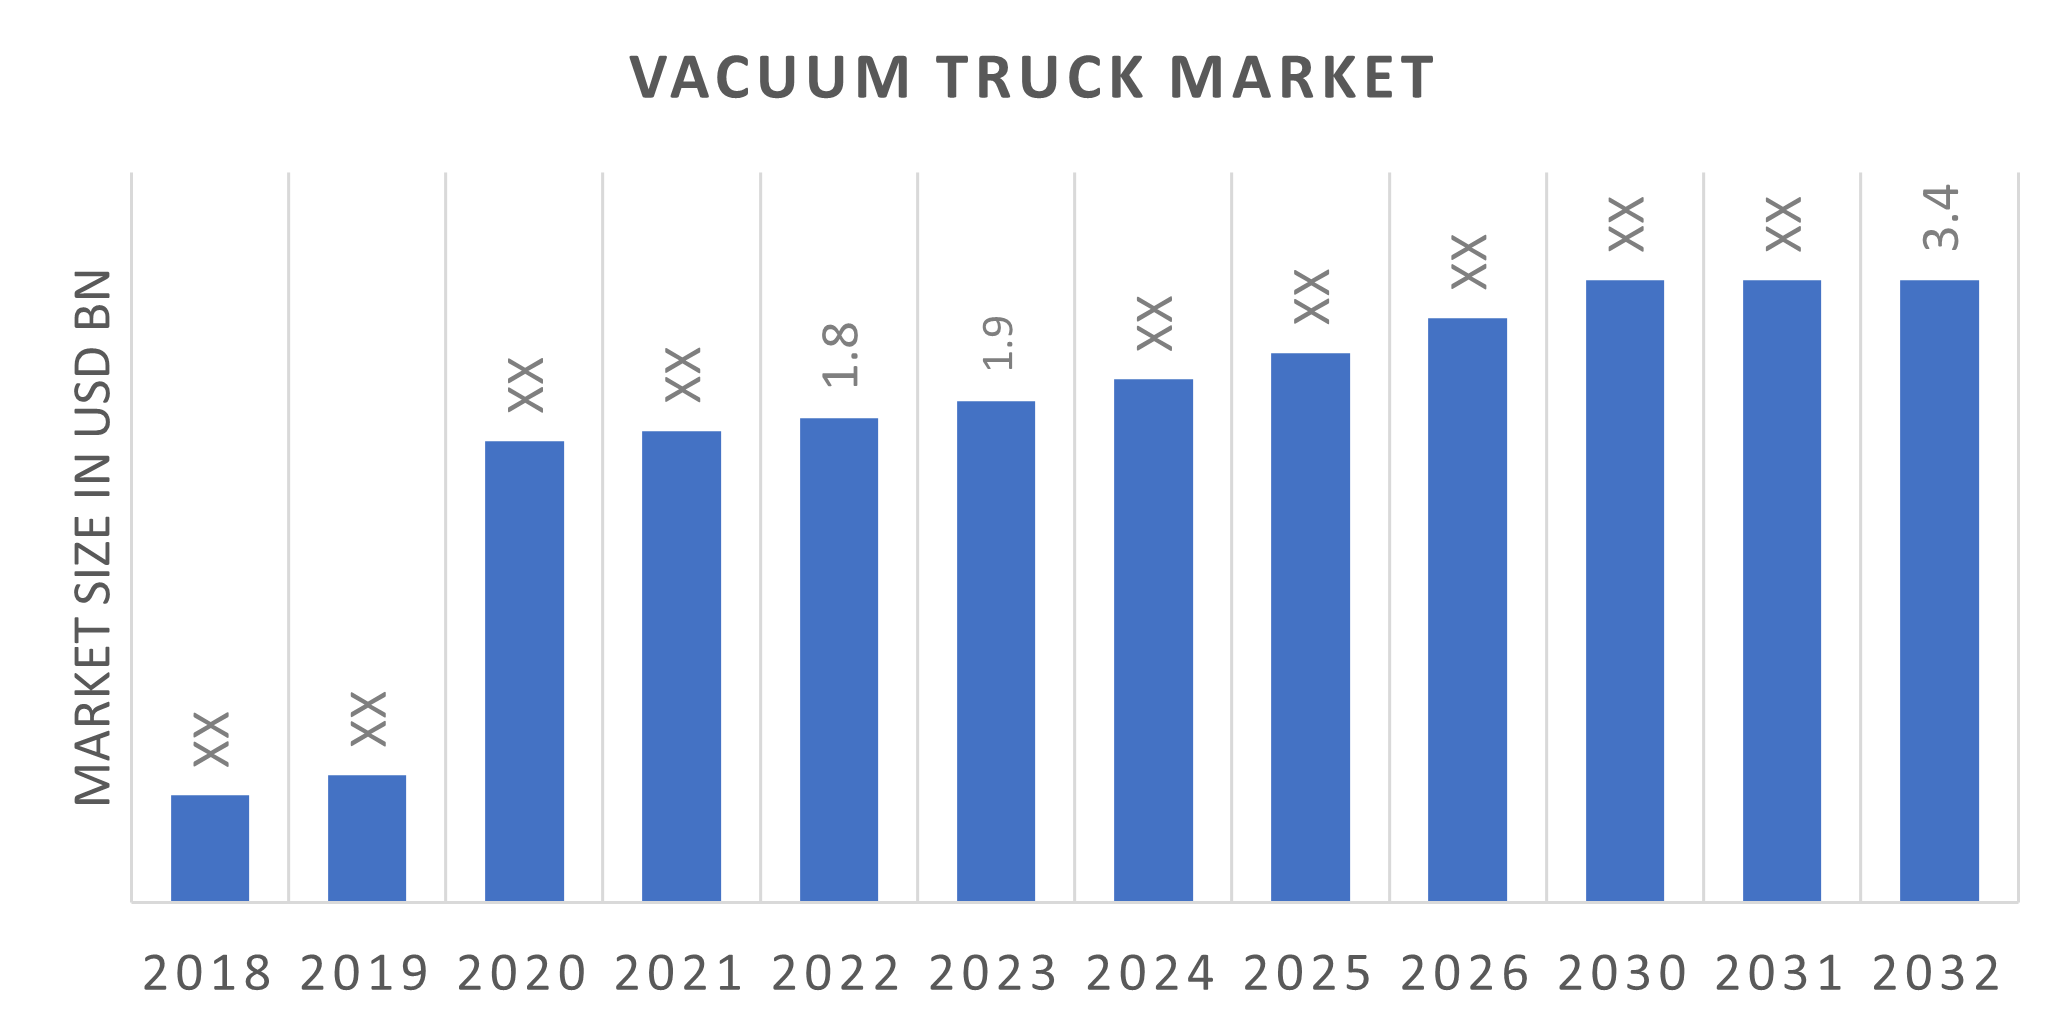 Global Vacuum Truck Market Overview